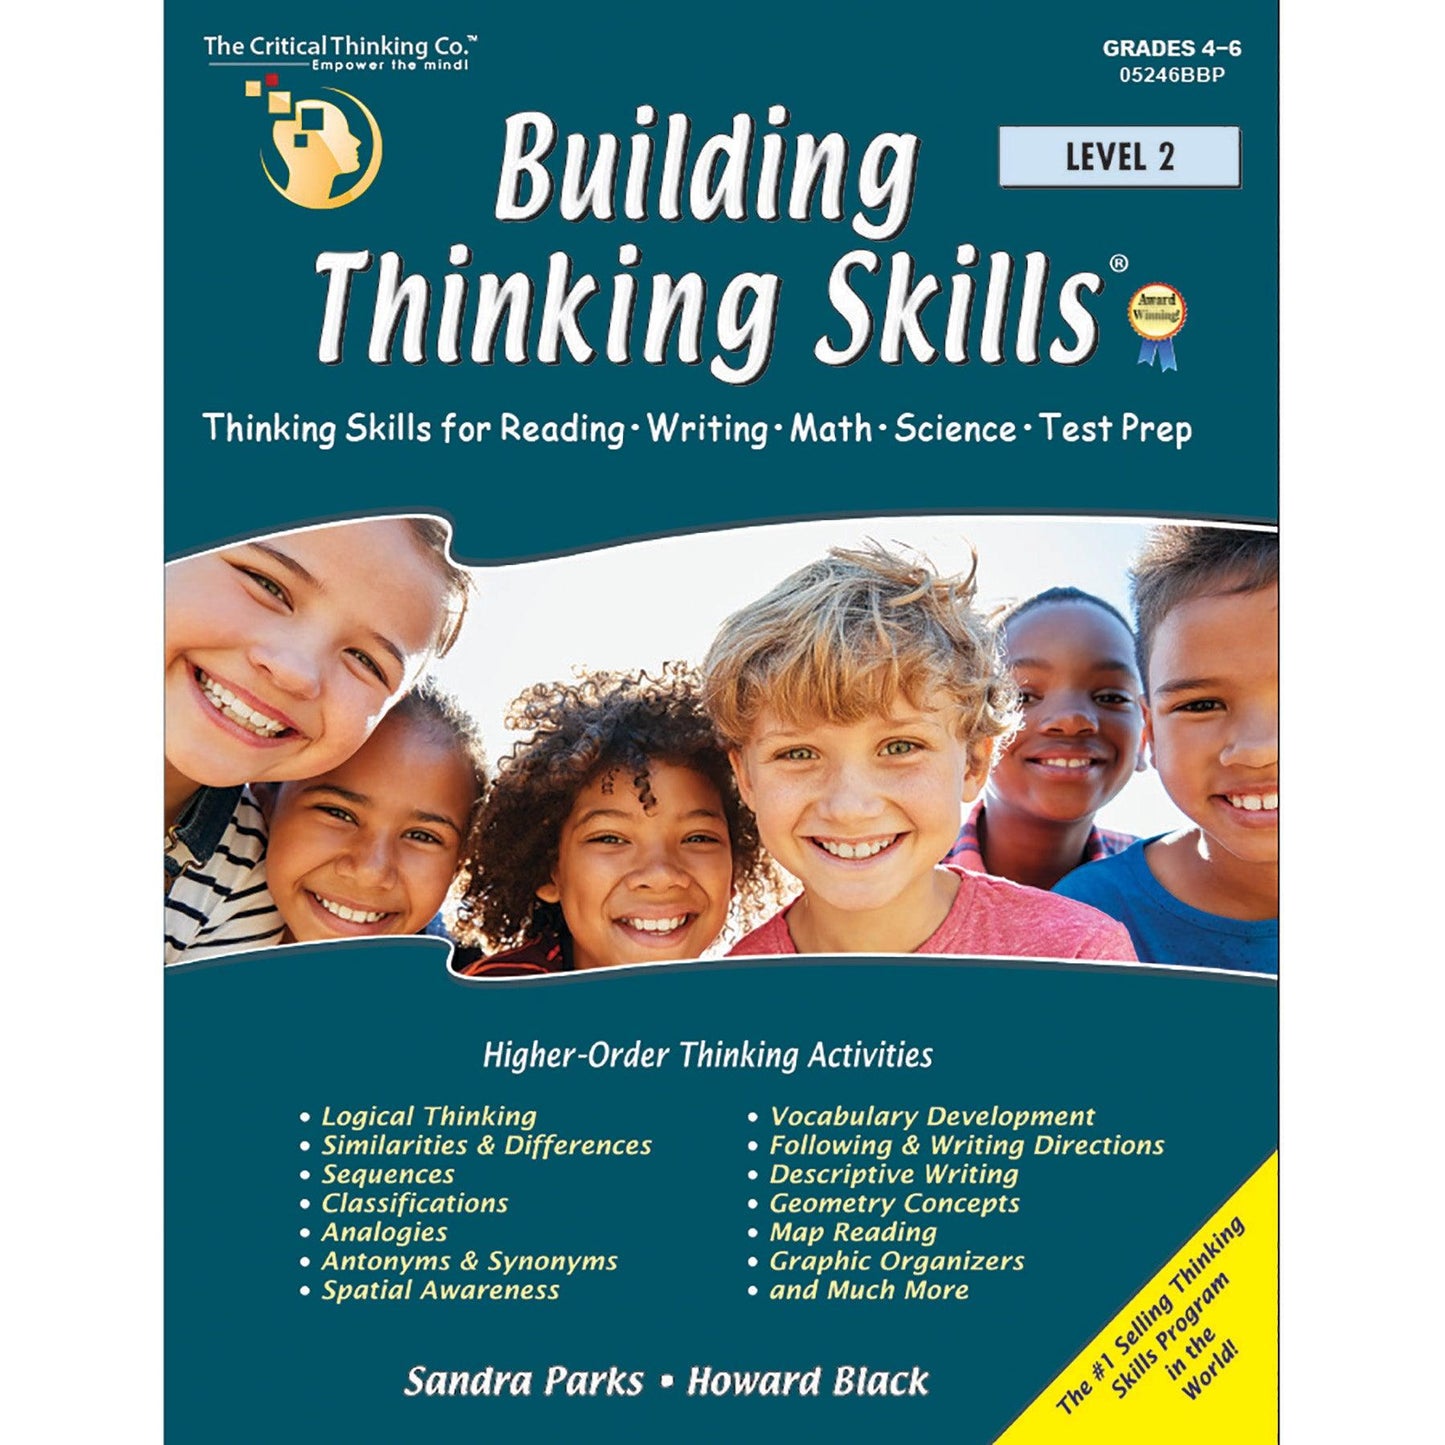 Building Thinking Skills®, Level 2, Grades 4-6 - Loomini